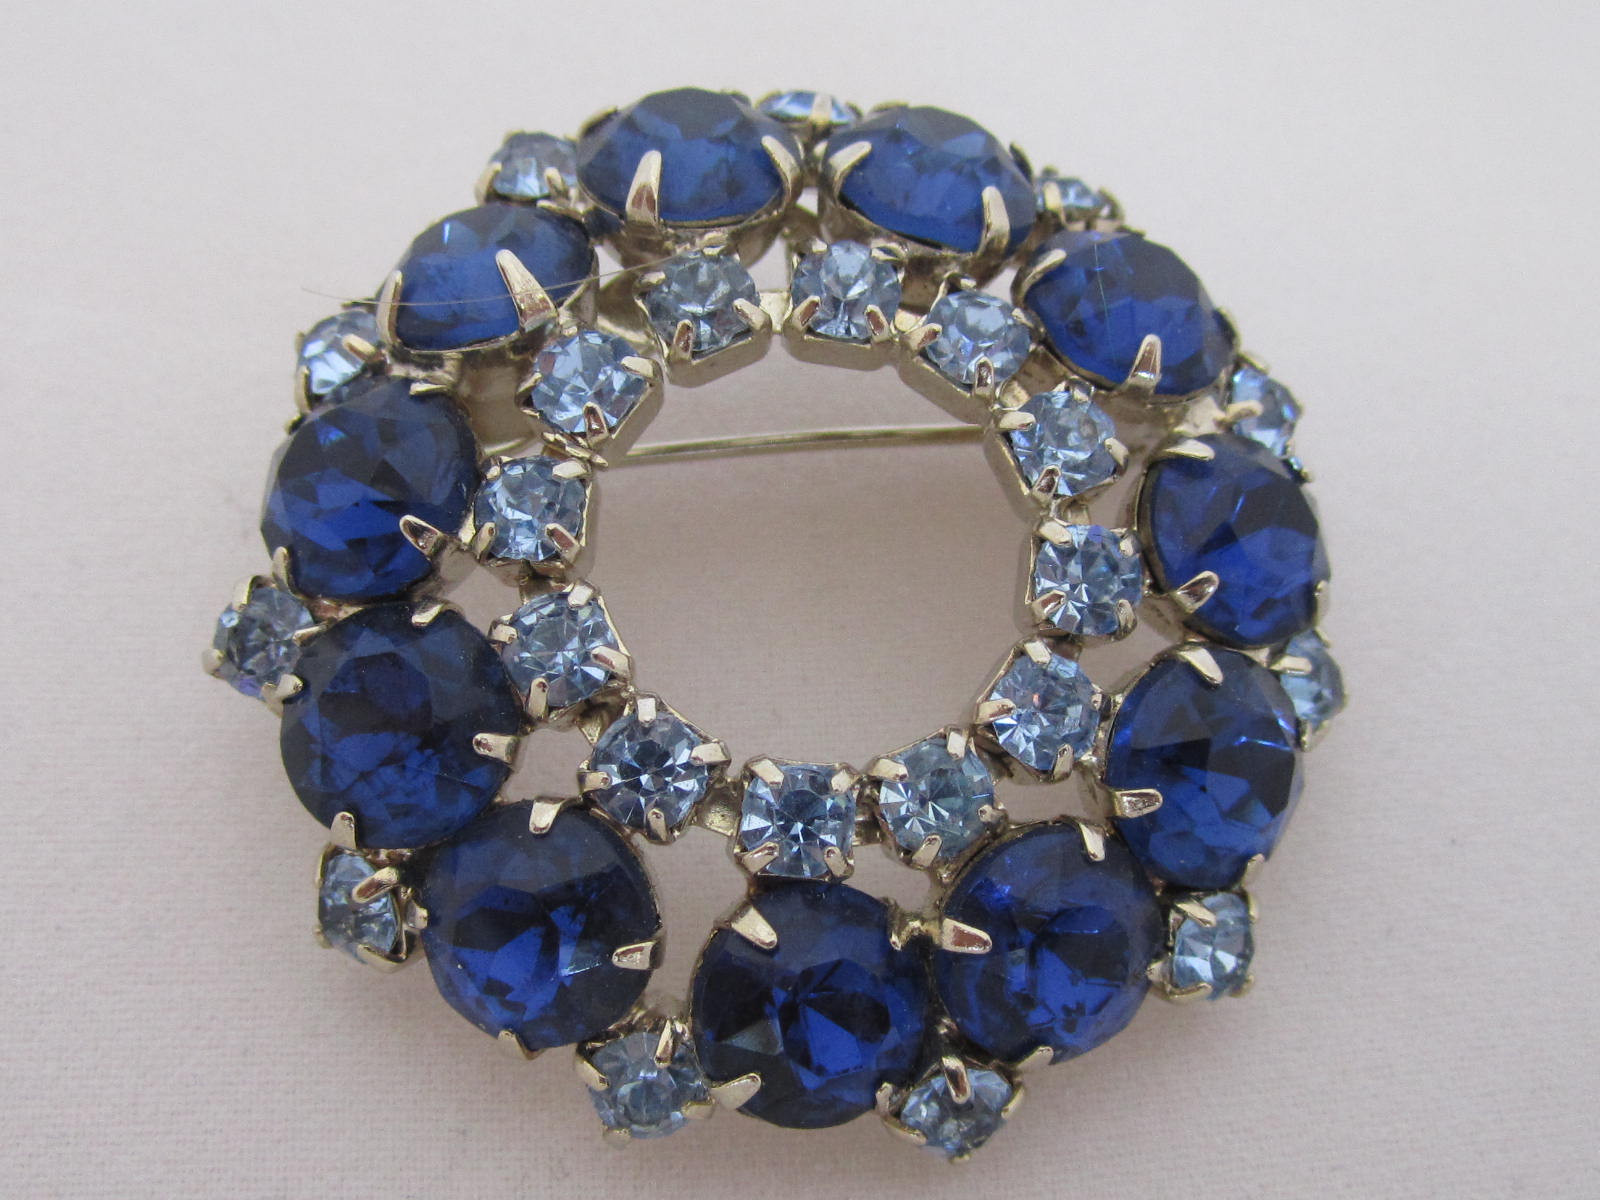 Pins Jewelry Vintage Rhinestone Jewelry Blue and Aqua Round Brooch